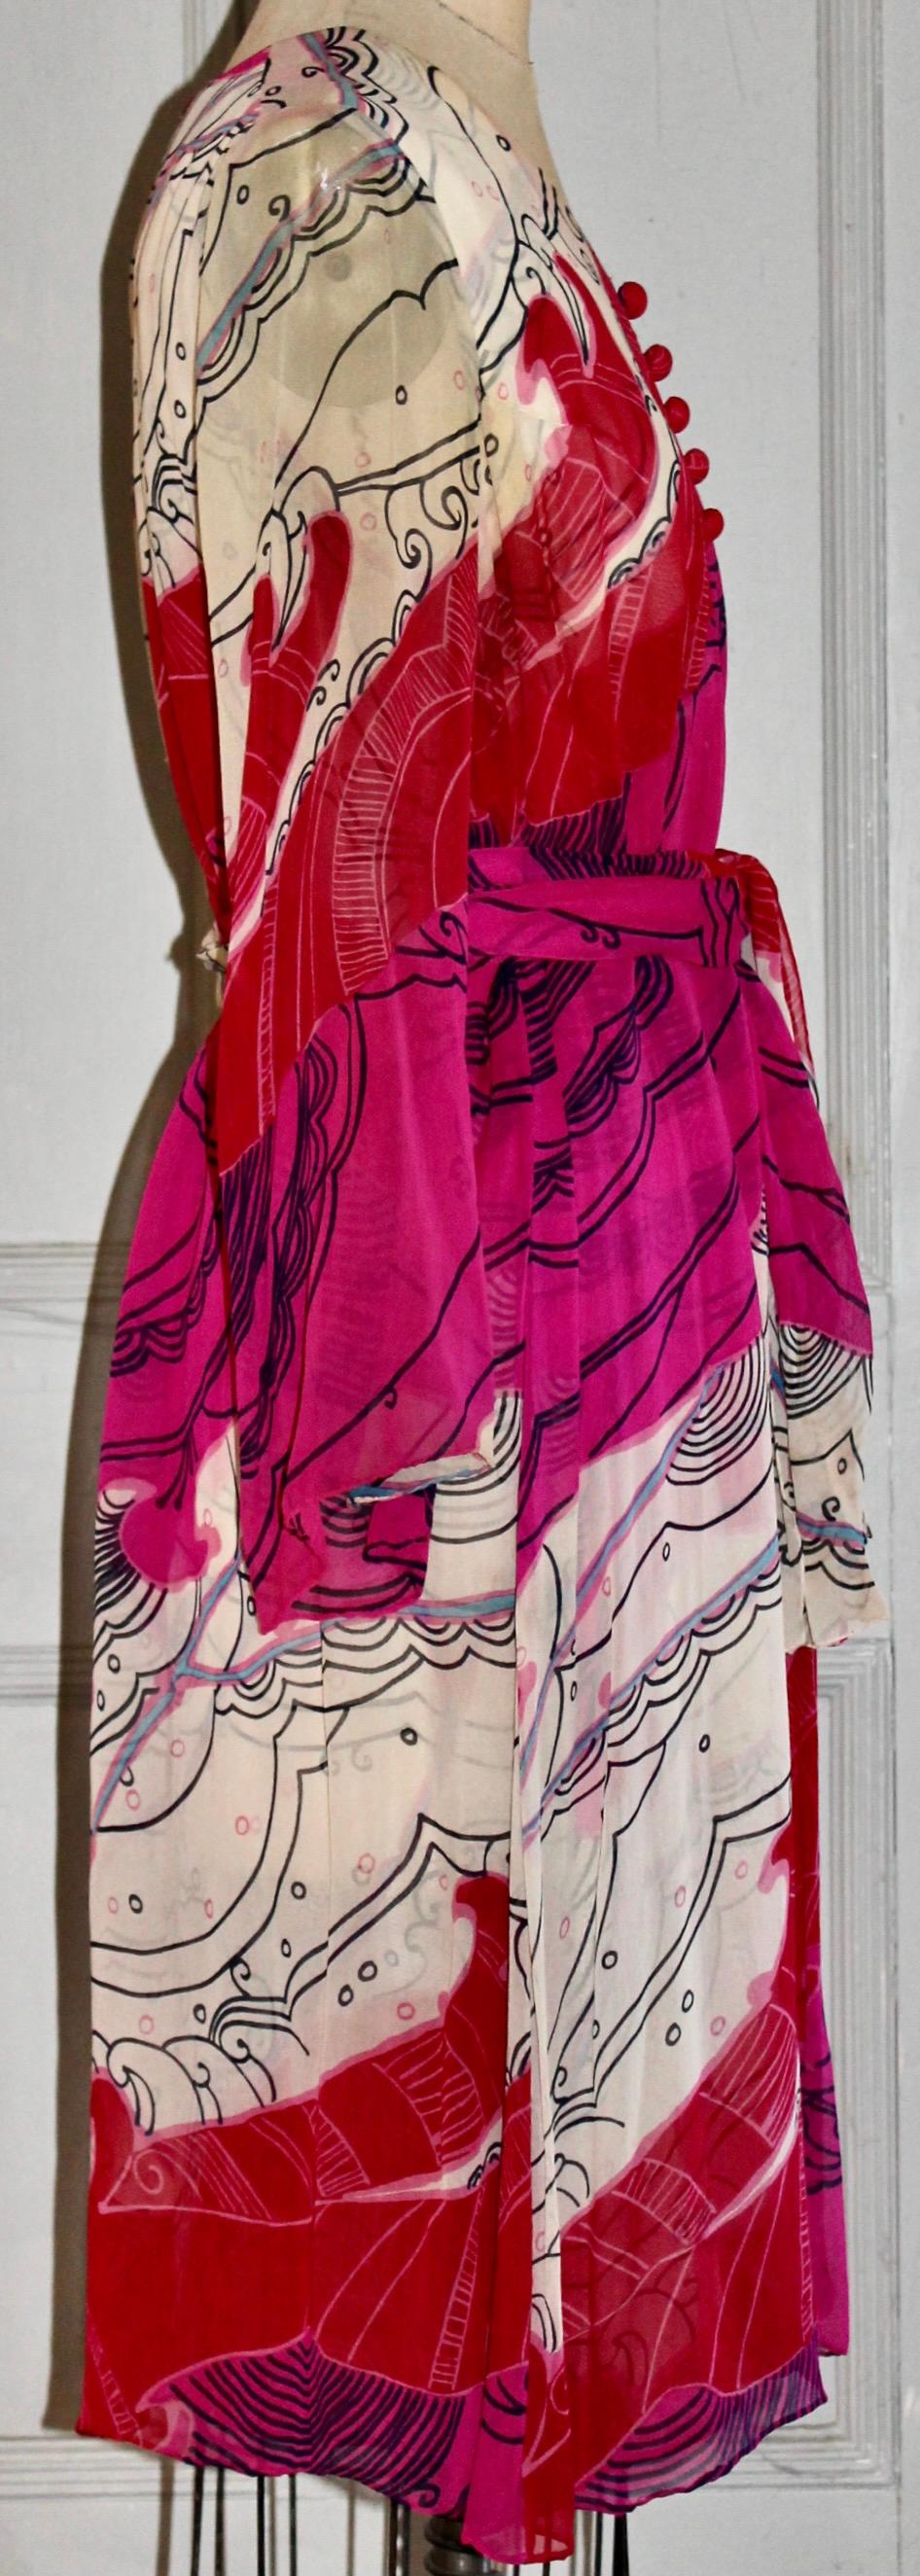 Hanae Mori, Tokyo 1970 Silk Chiffon Dress In Good Condition For Sale In Sharon, CT